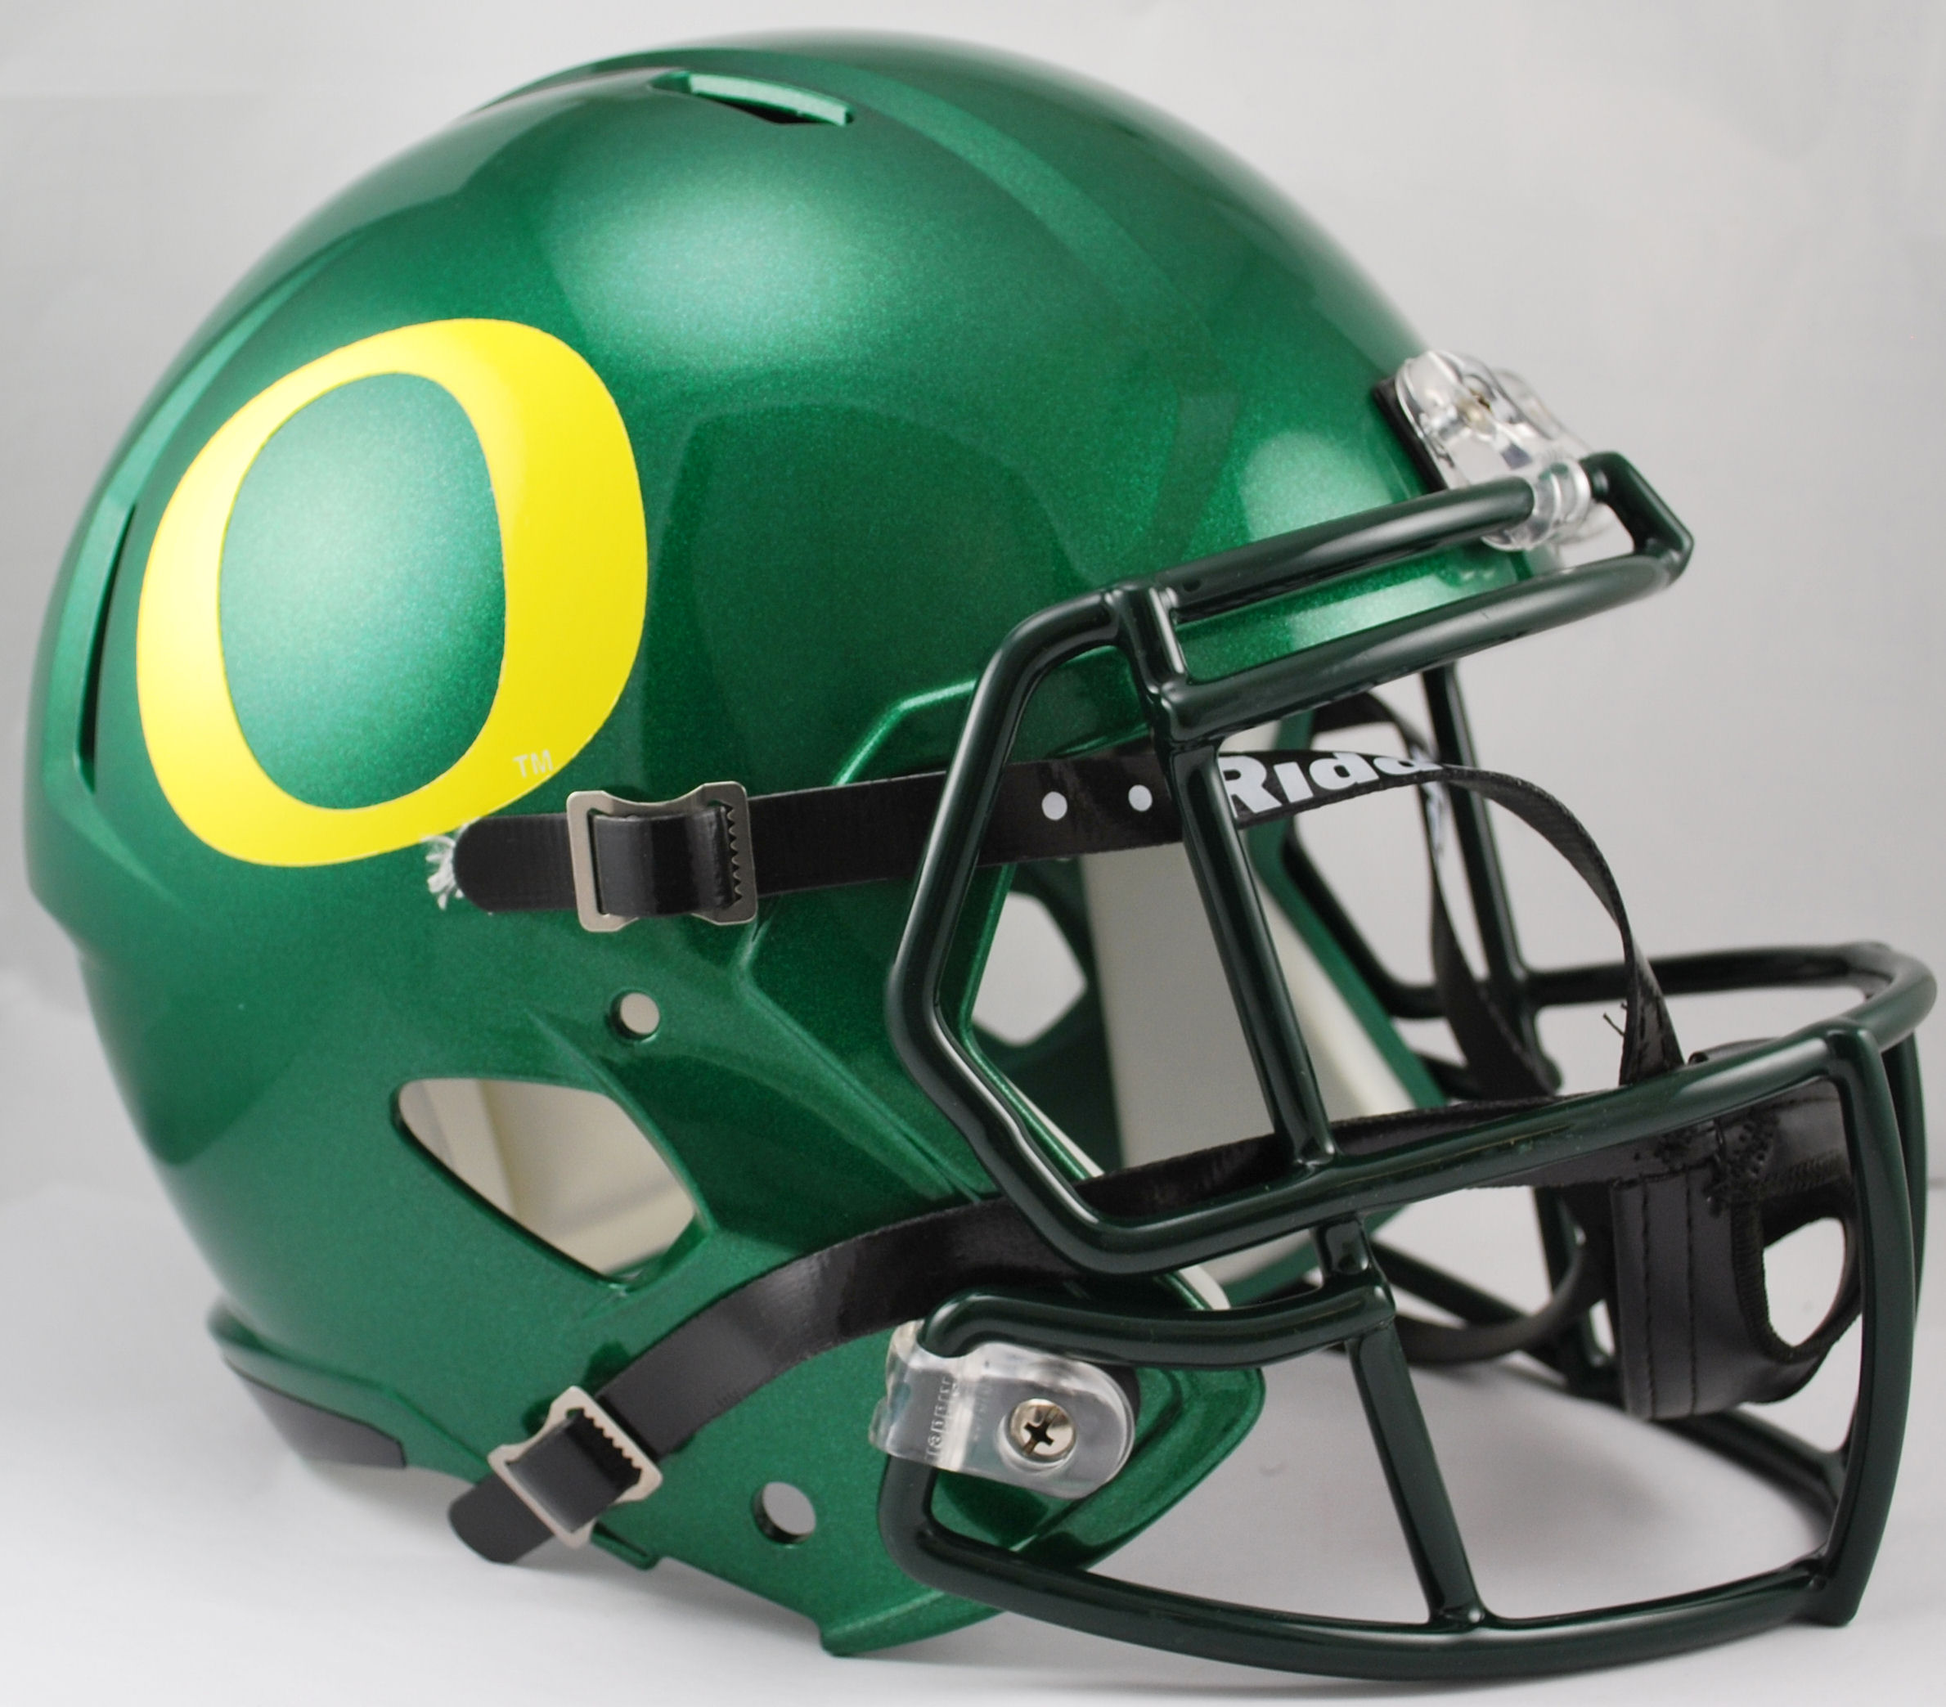 Oregon Ducks full size replica helmet